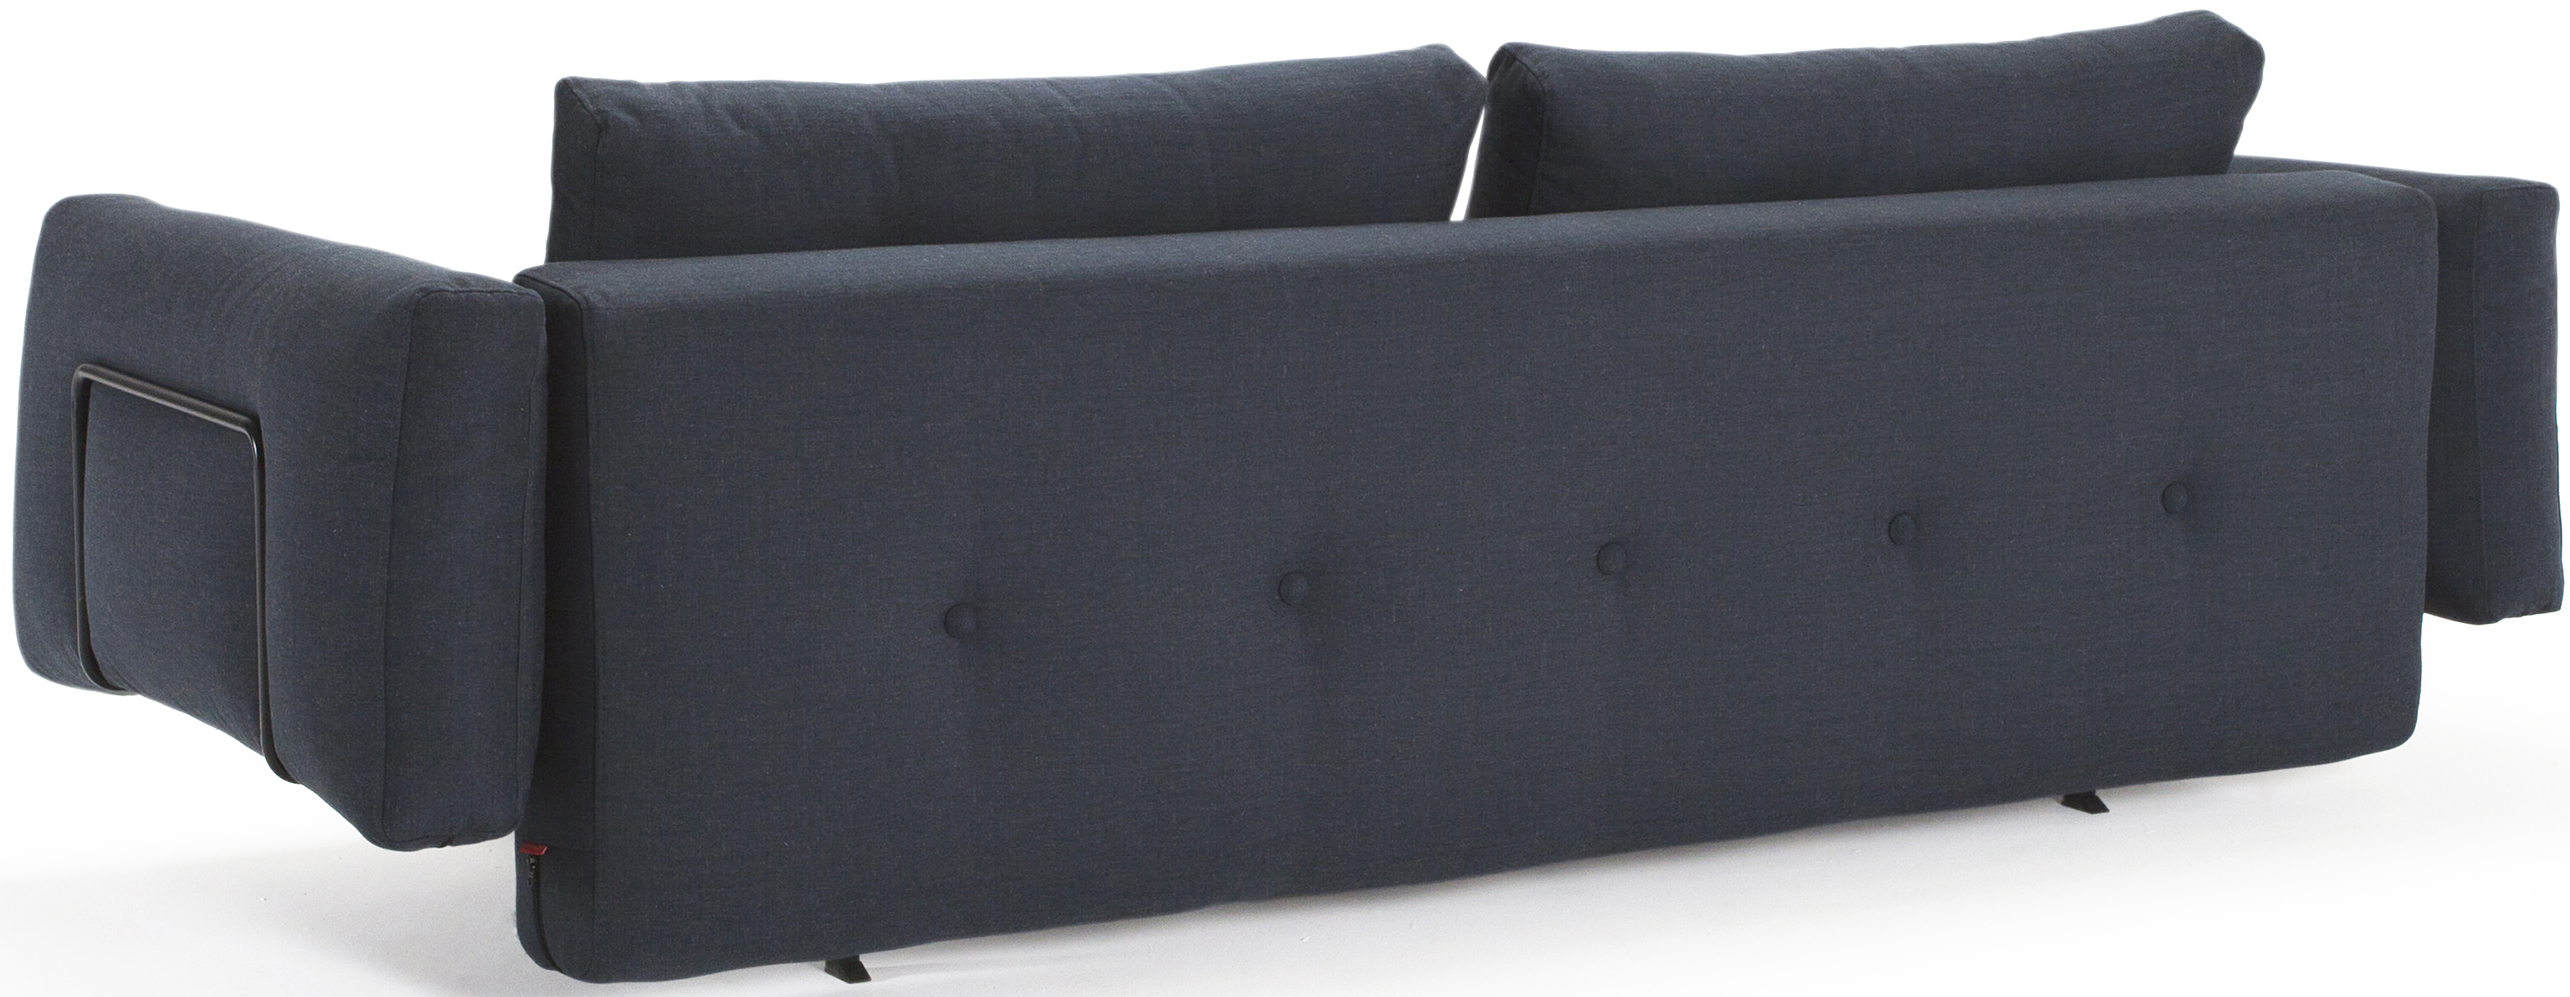 innovation living recast plus sofa bed